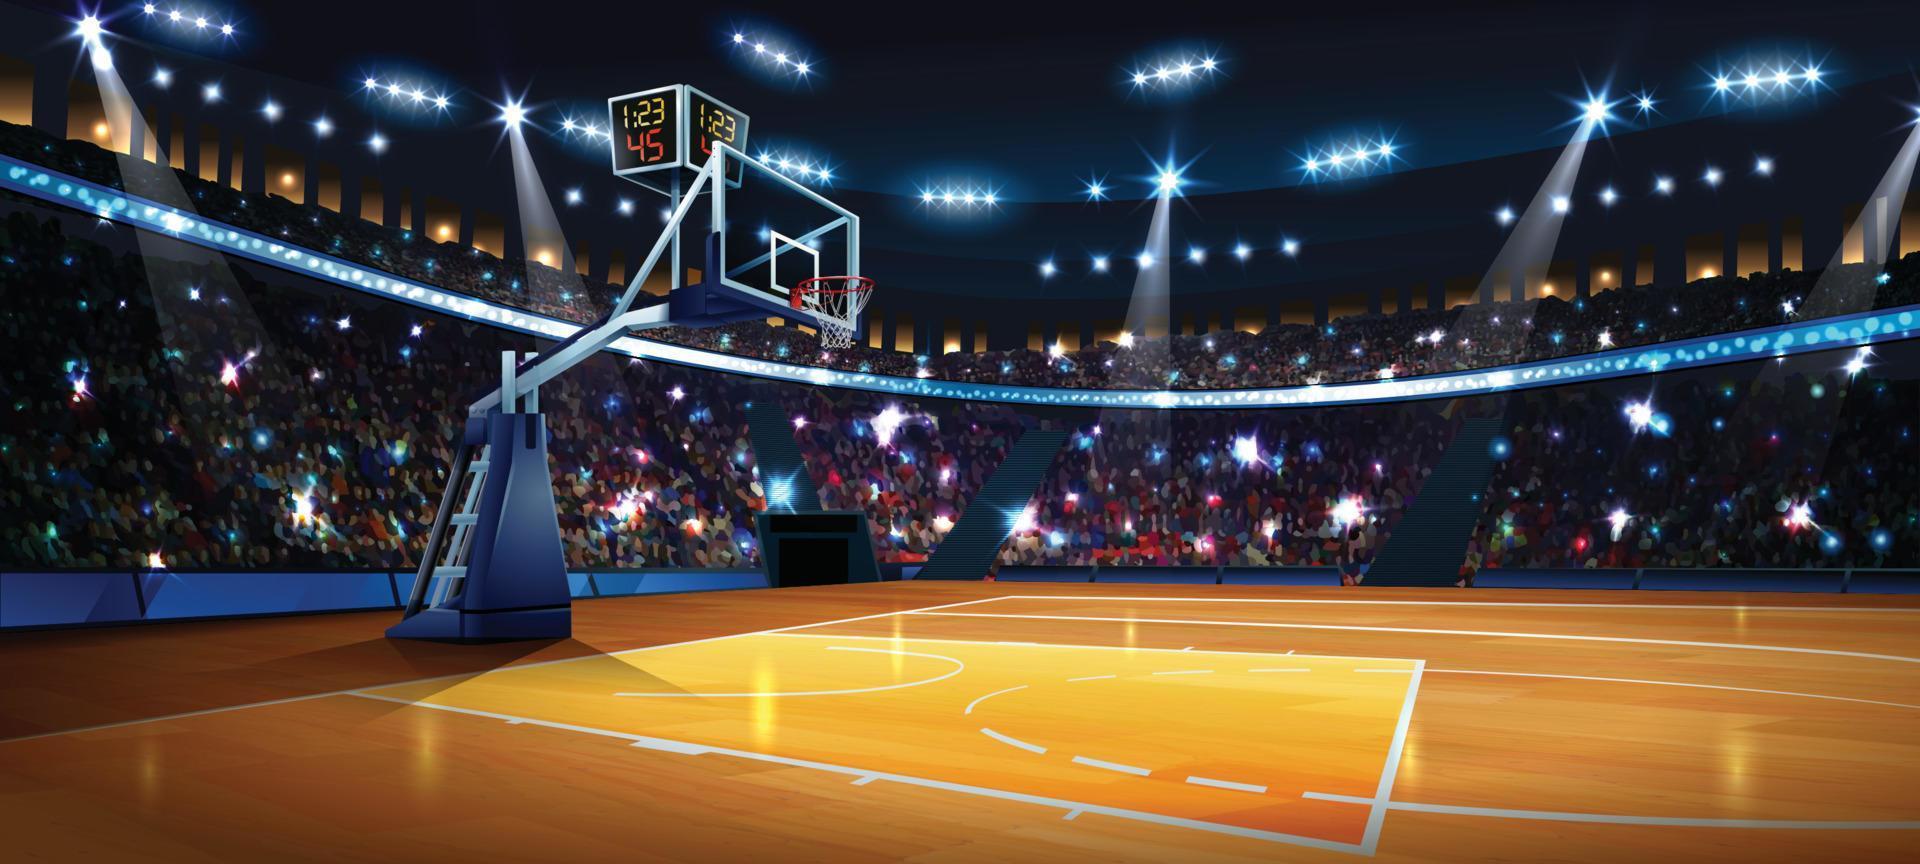 Indoor Basketball Court Concept Background vector